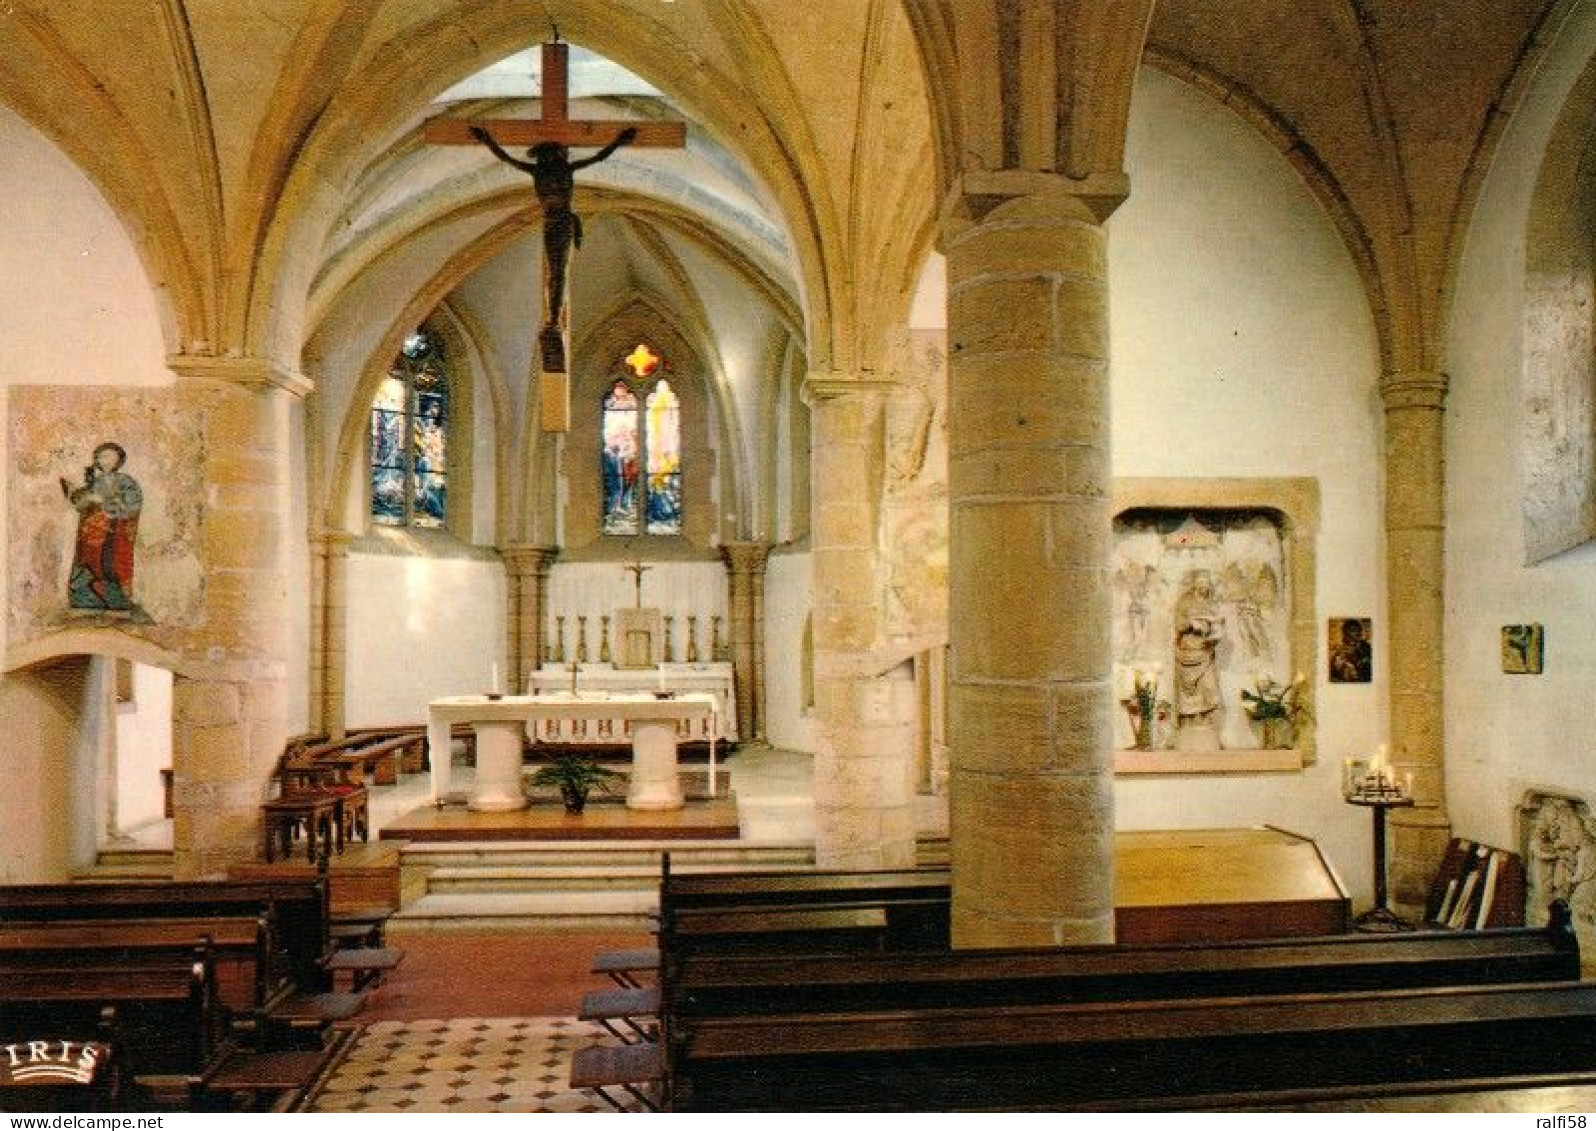 1 AK Frankreich * Pfarrkirche St-Maximin In Jarny - Innenansicht - Département Meurthe-et-Moselle * - Jarny